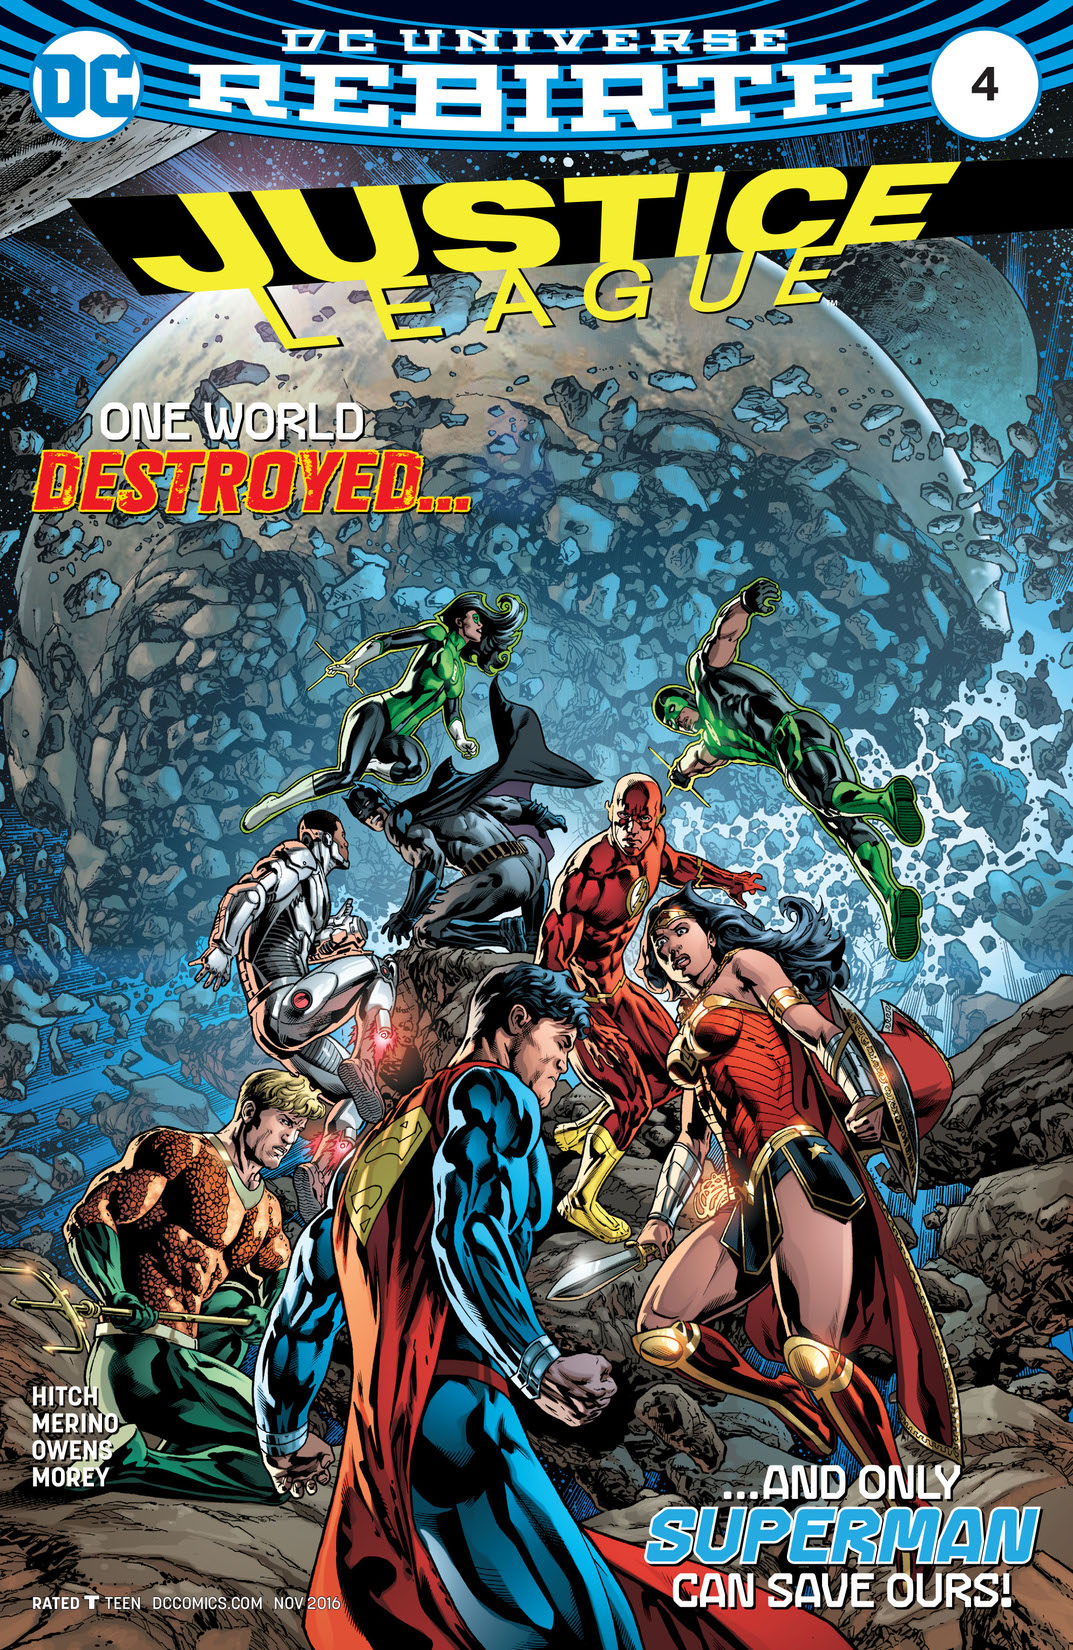 Justice League (2016-) #4 preview images